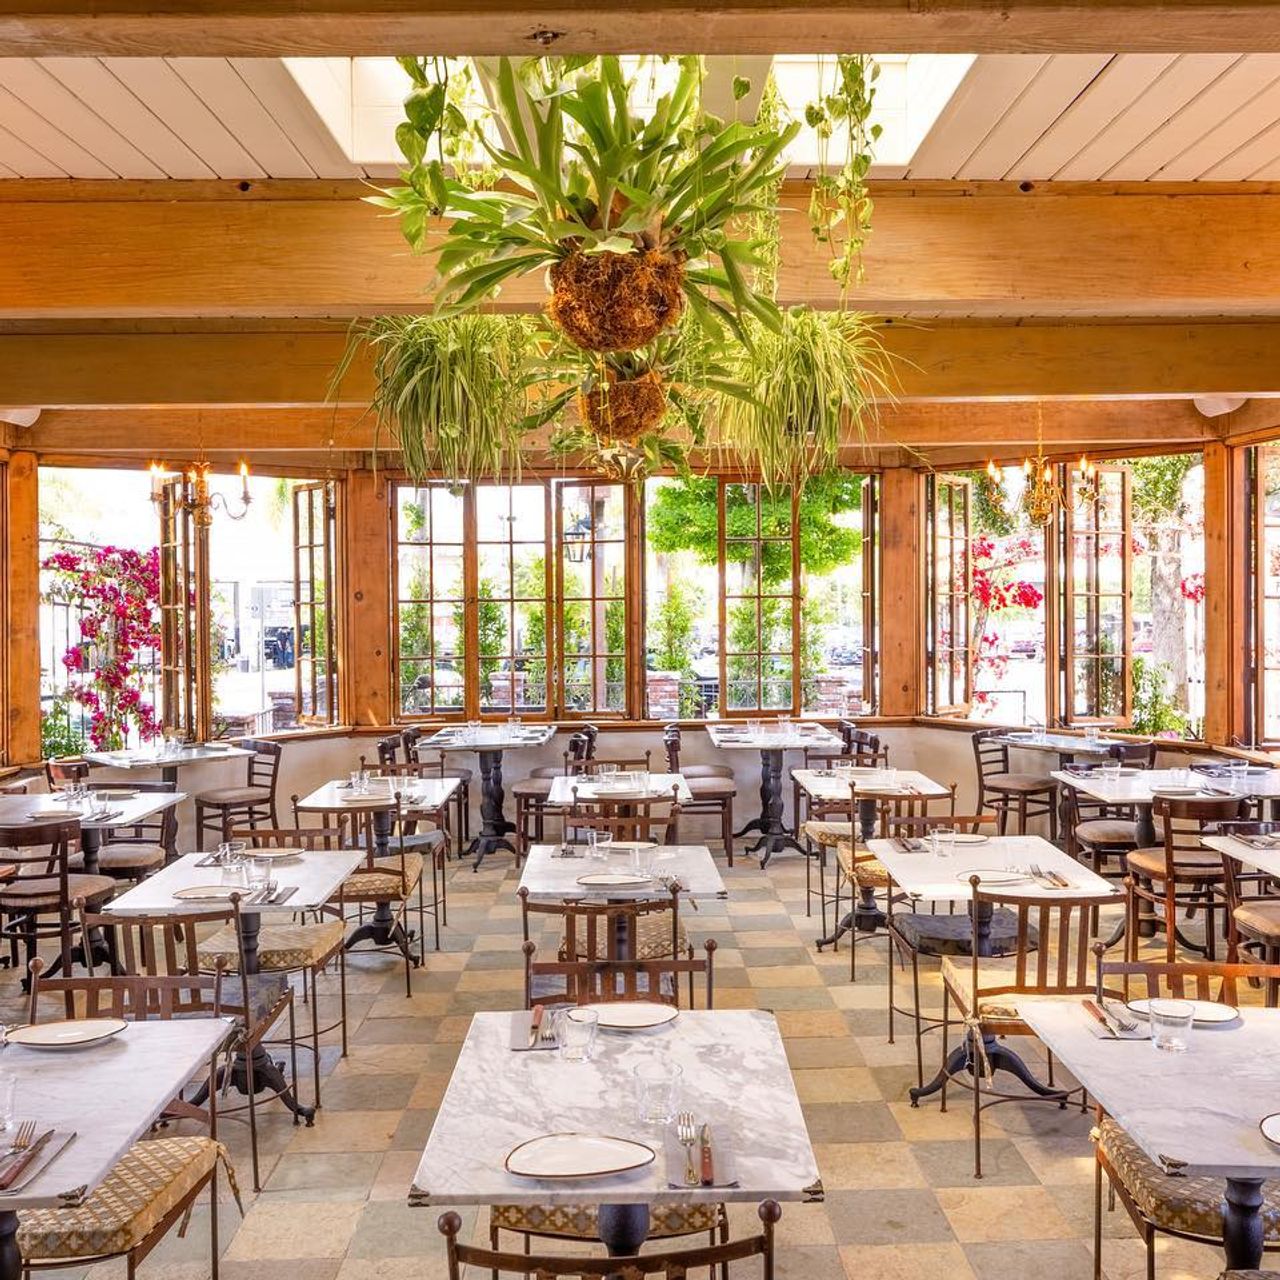 Bacari Sherman Oaks Restaurant - Los Angeles, CA